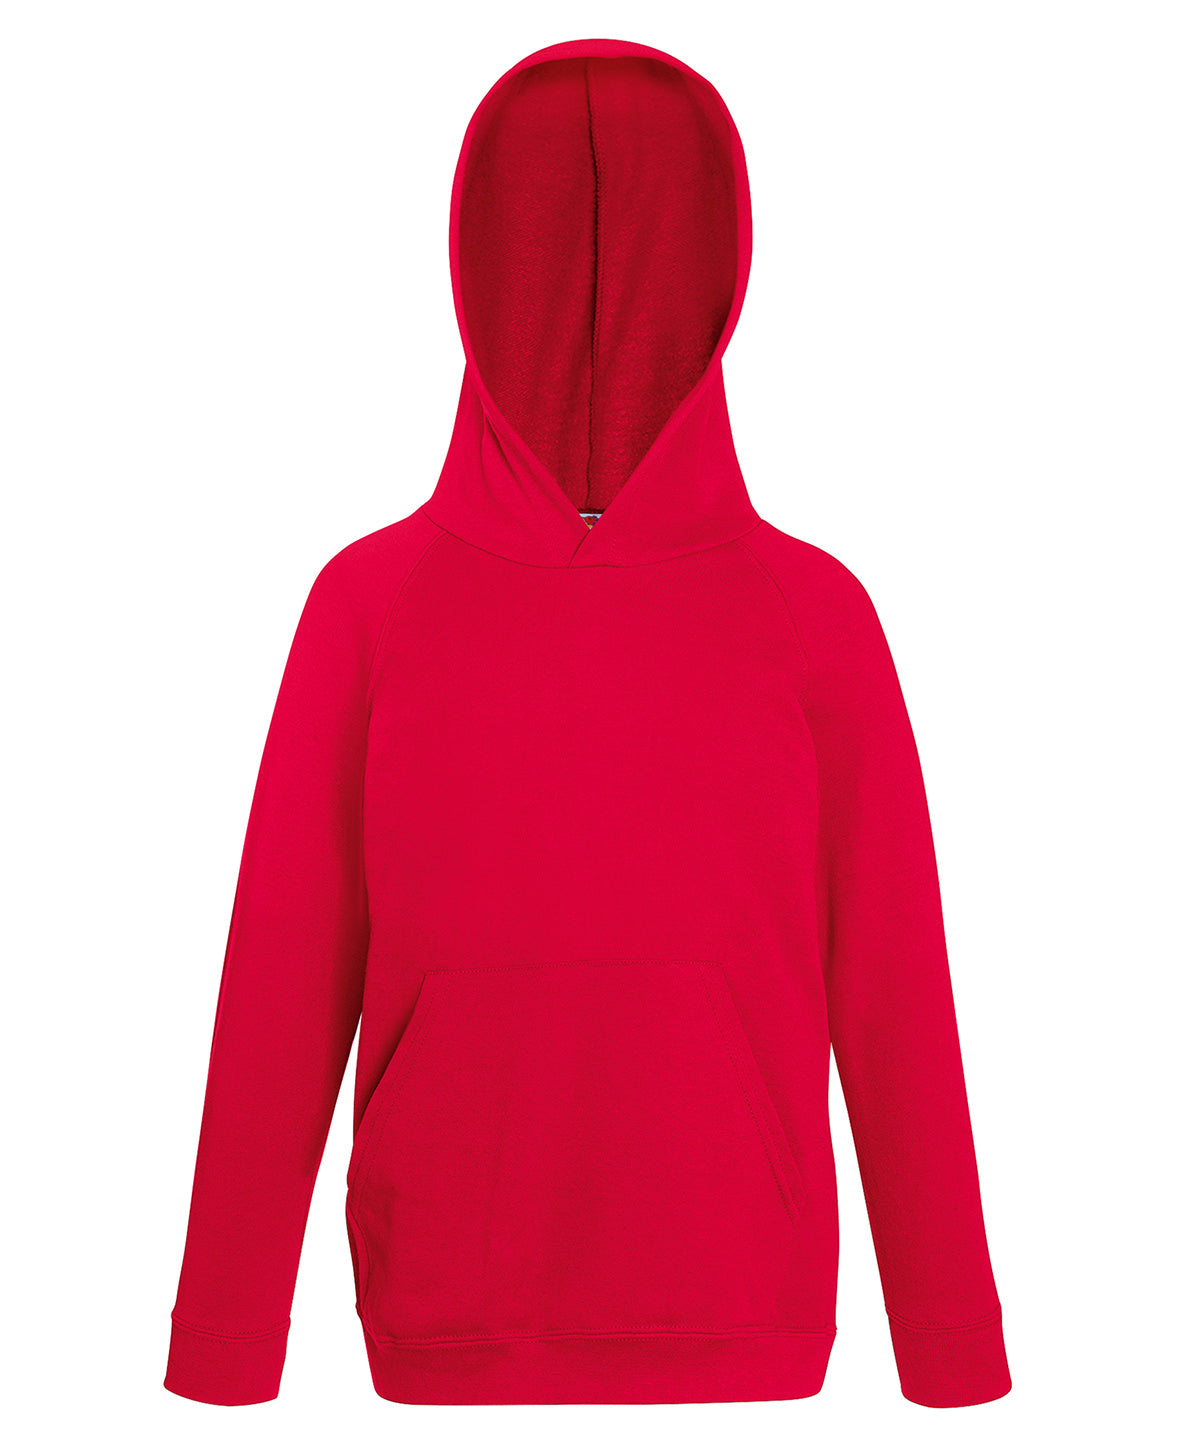 Hettupeysur - Kids Lightweight Hooded Sweatshirt